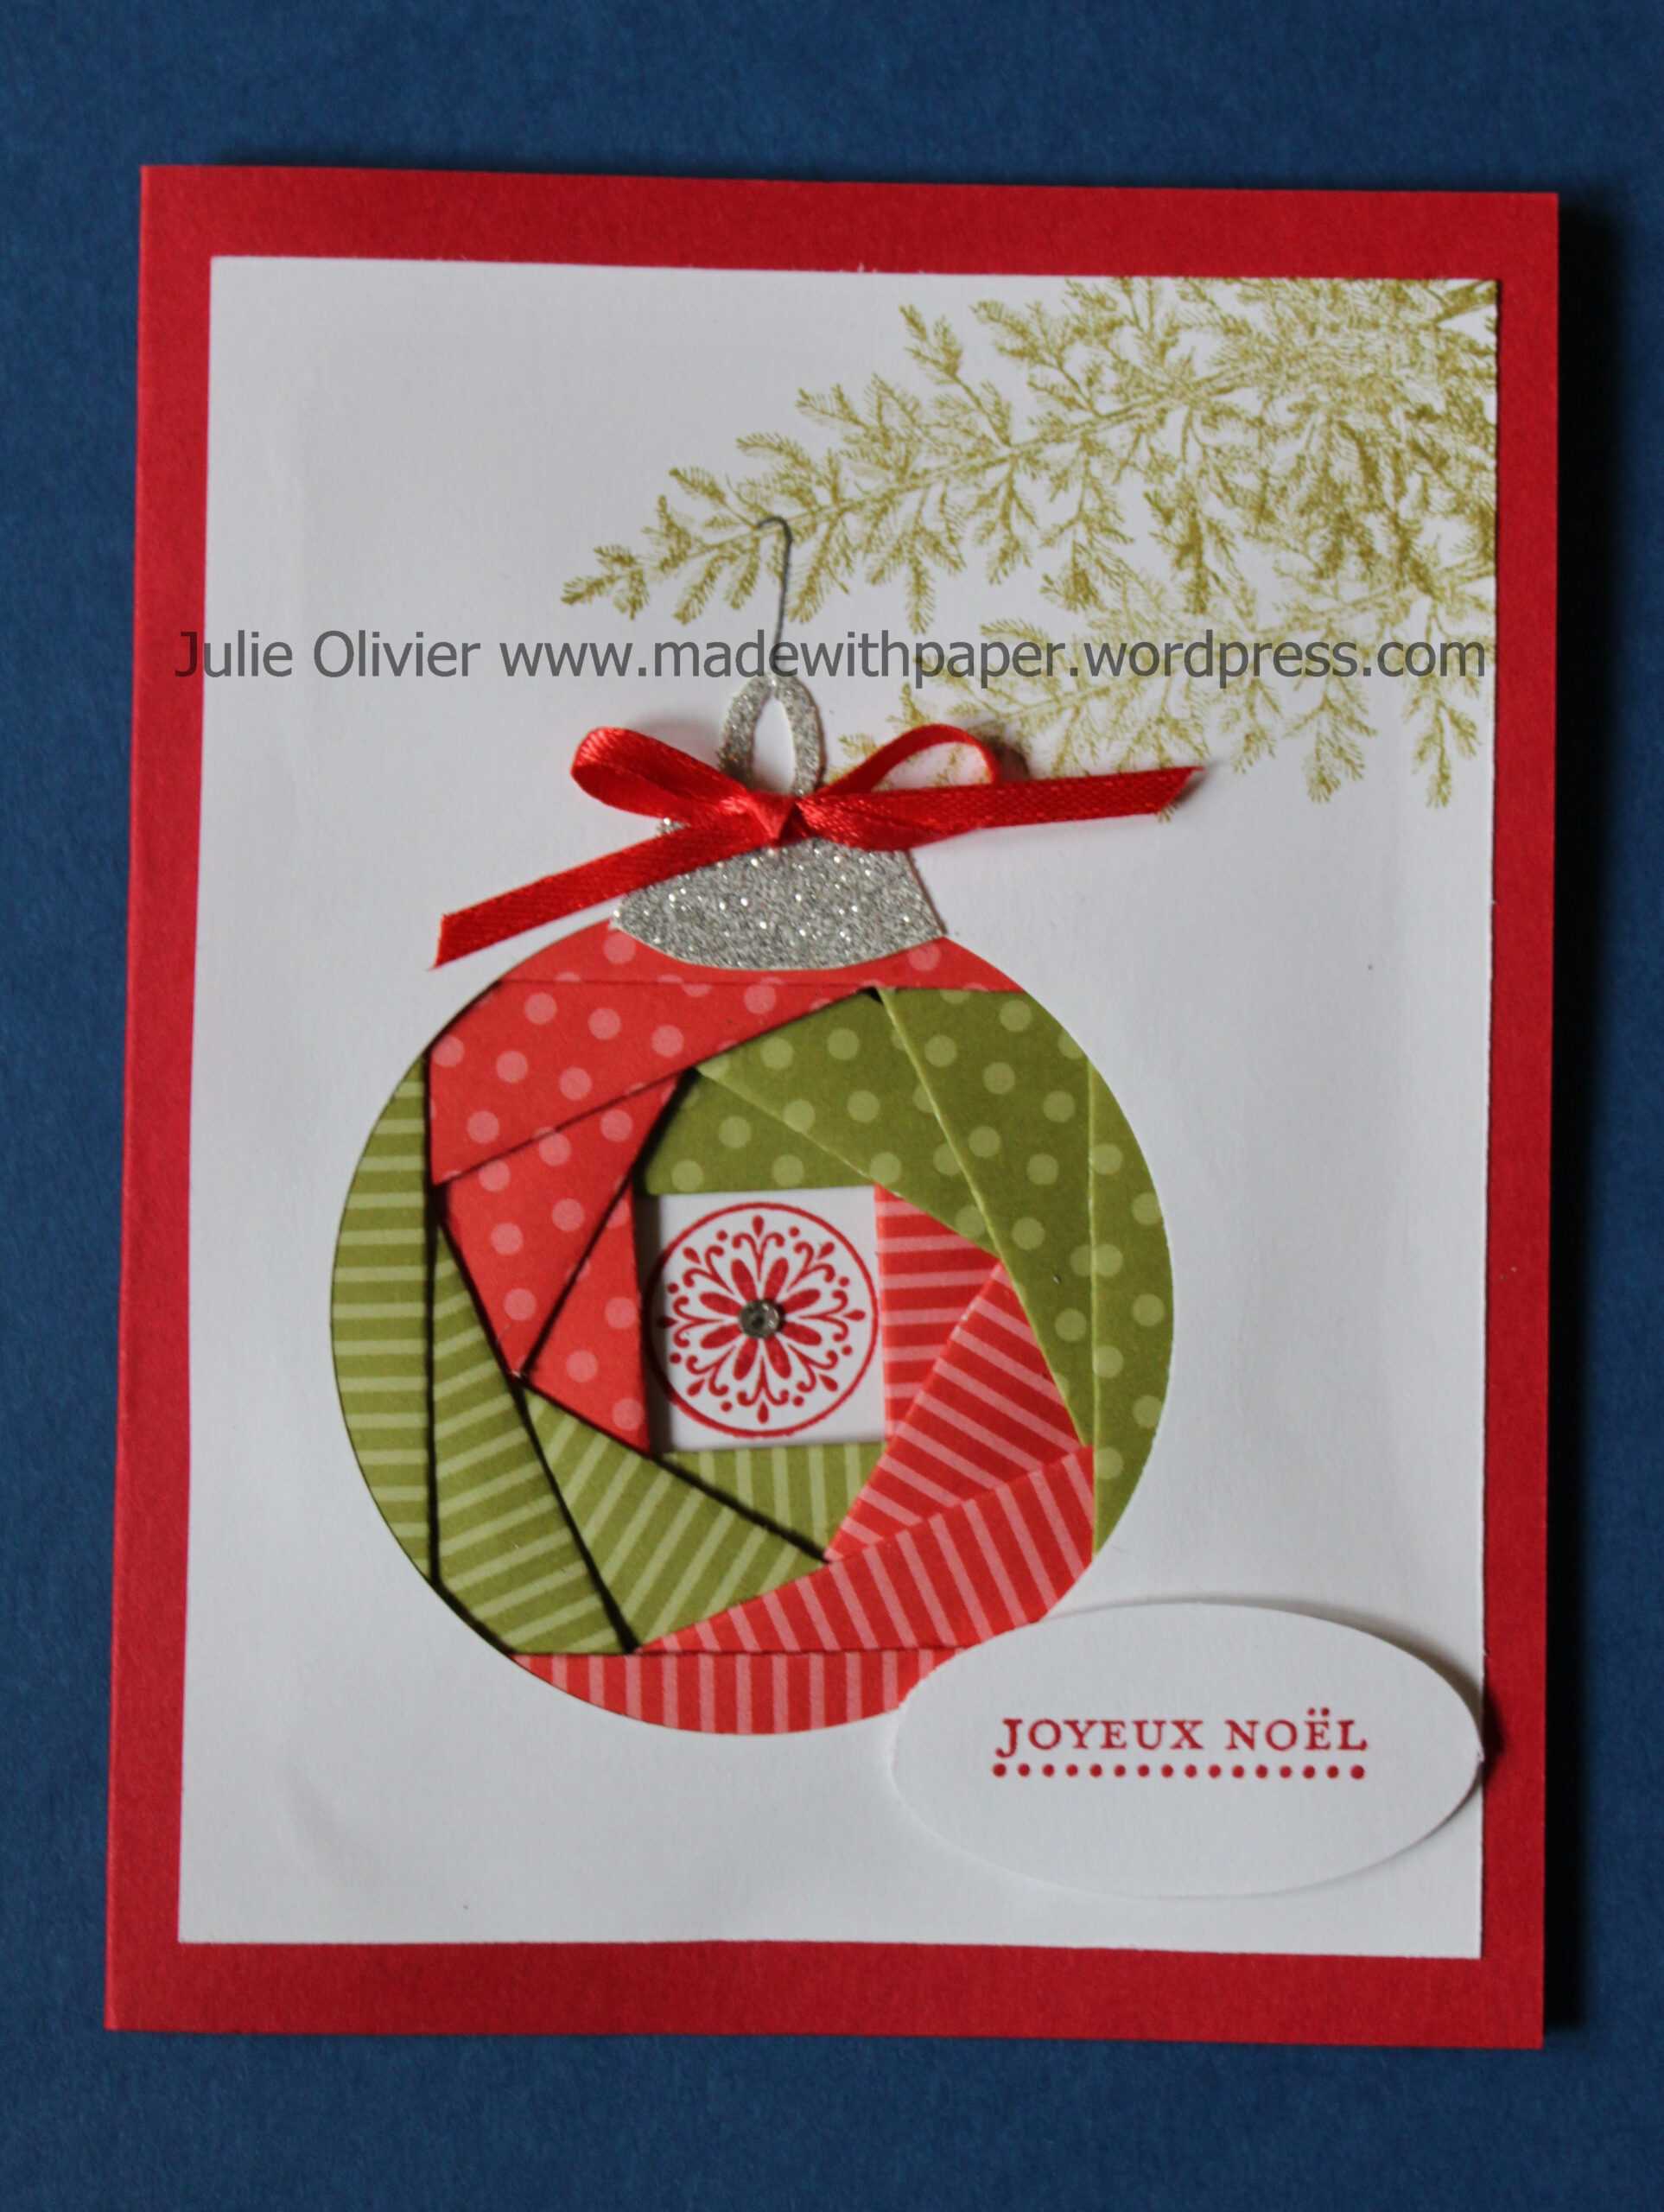 Iris Folding | Made With Paper Throughout Iris Folding Christmas Cards Templates